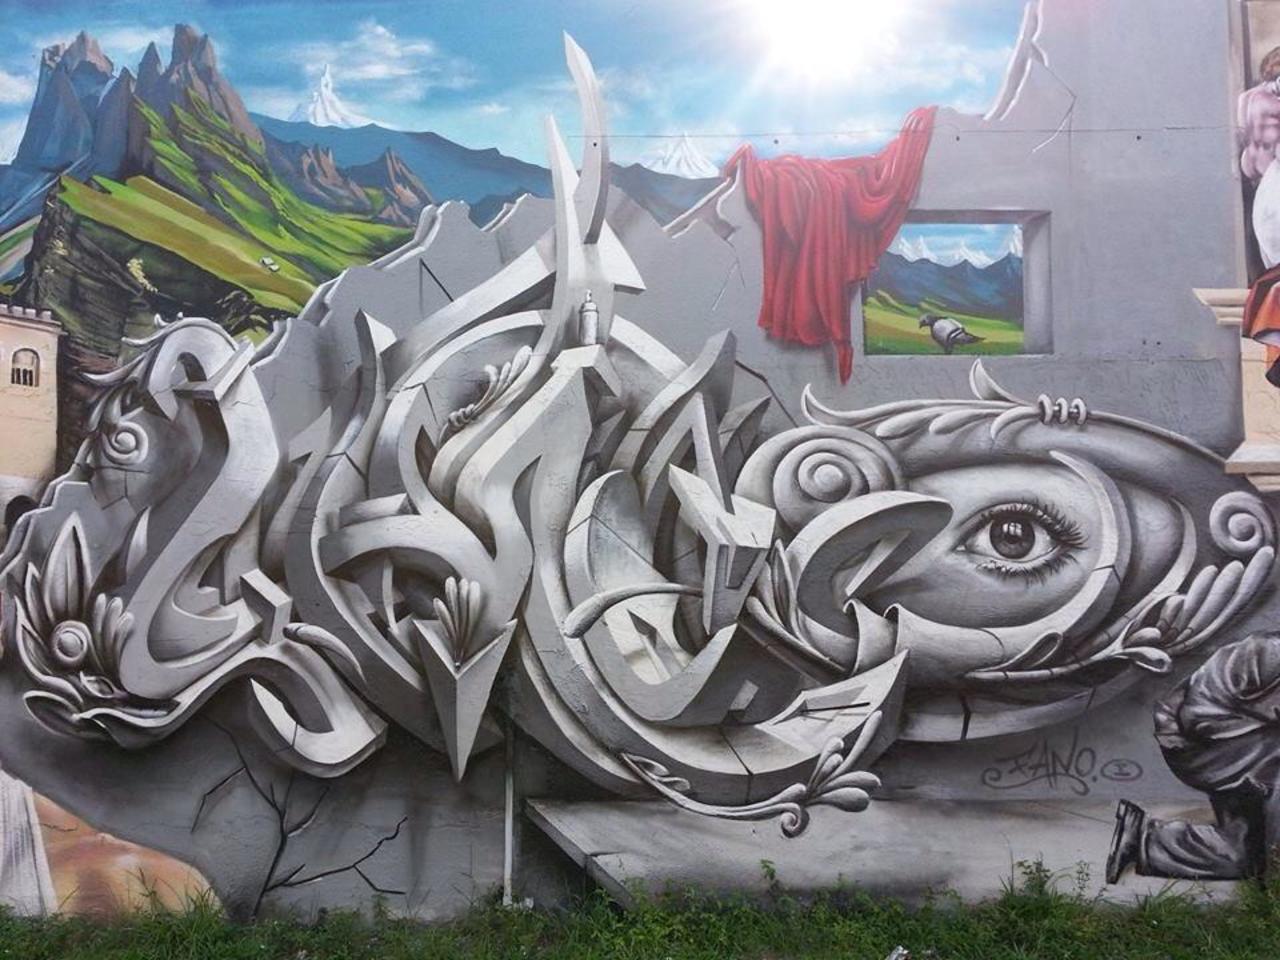 RT @designopinion: Artist 'Smog One' new Street Art wall located in Broward blvd, Florida, USA #art #mural #graffiti #streetart http://t.co/NxP1o356cl